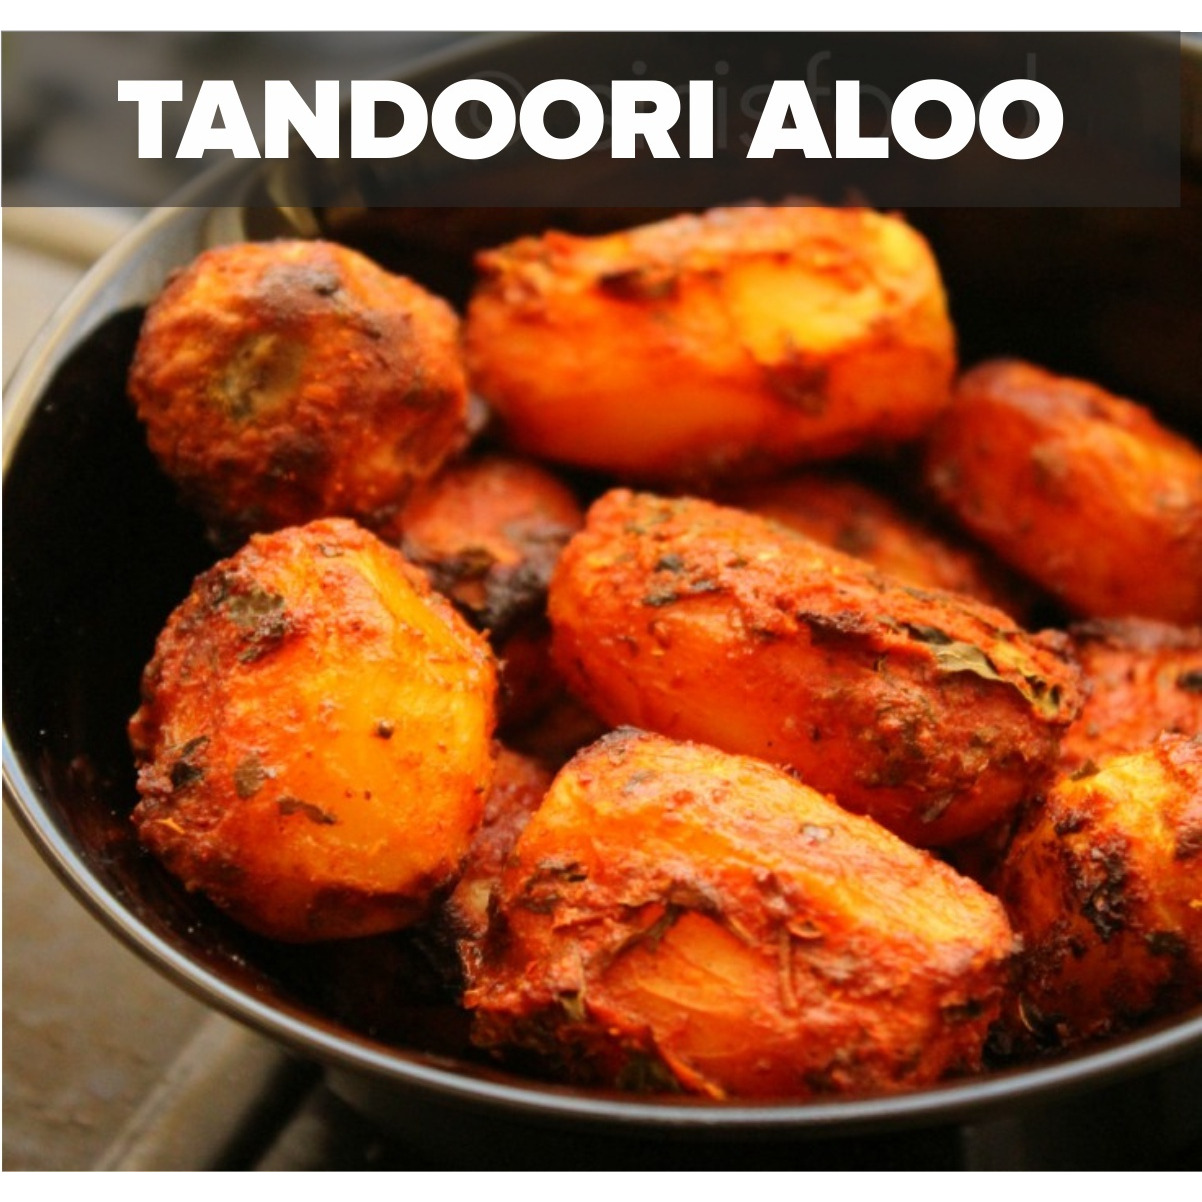 EL The Cook Peshwari Tandoori Marinade, CONCENTRATE PASTE, Smoky & Spicy Indian Meat Marinade, 3 pack x 1.7oz, Vegetarian, Gluten Free (Flavor: Tandoori - 3 pack)